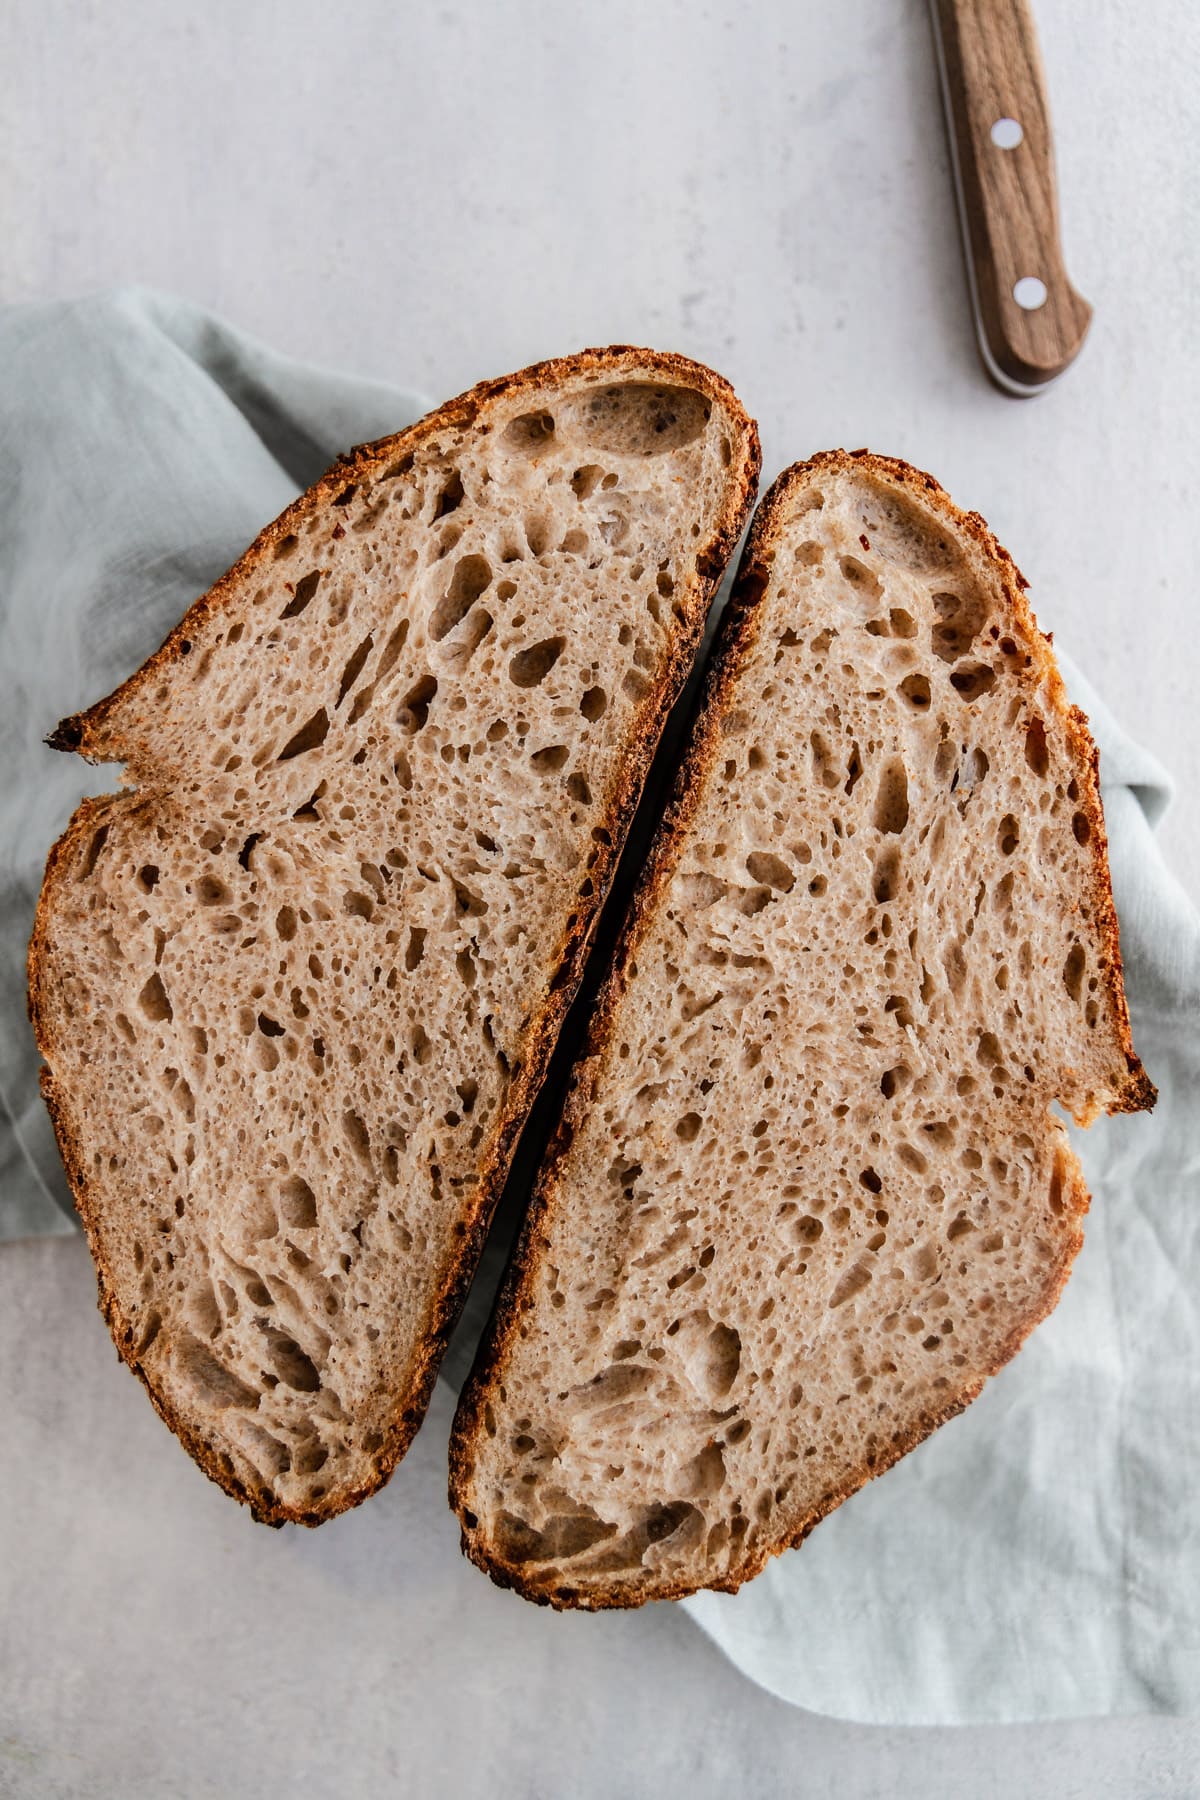 a loaf of sourdough bread cut in half